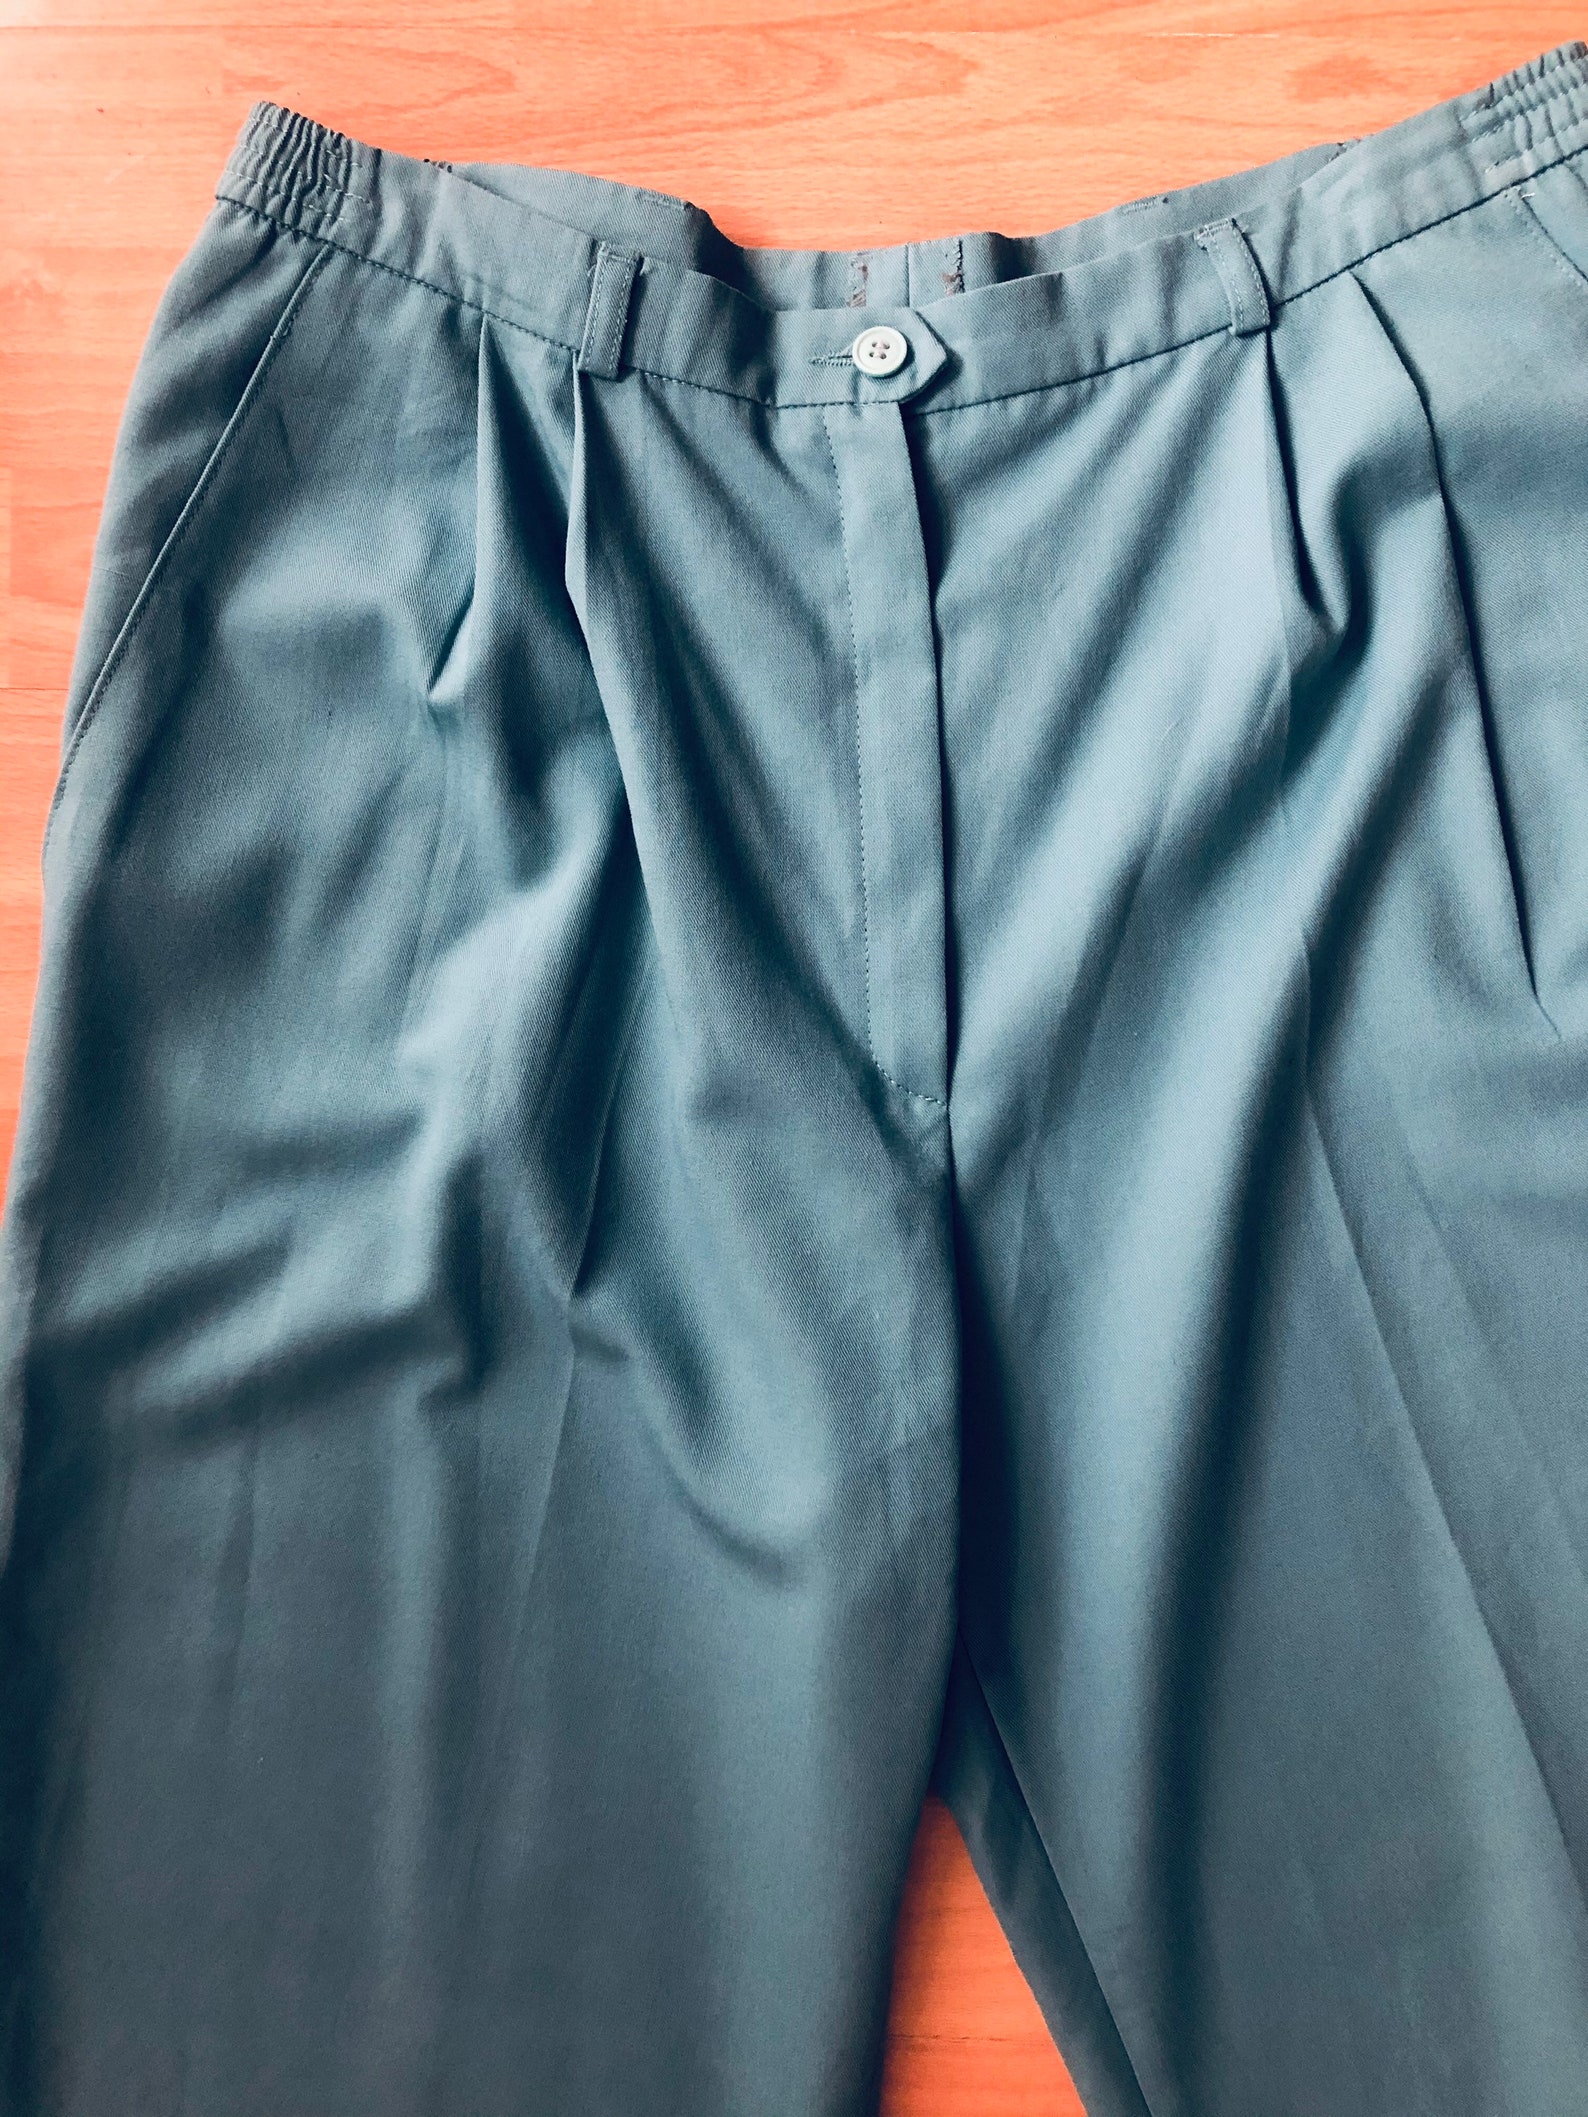 Vintage 90s turquoise pants secretary pants hipster | Etsy